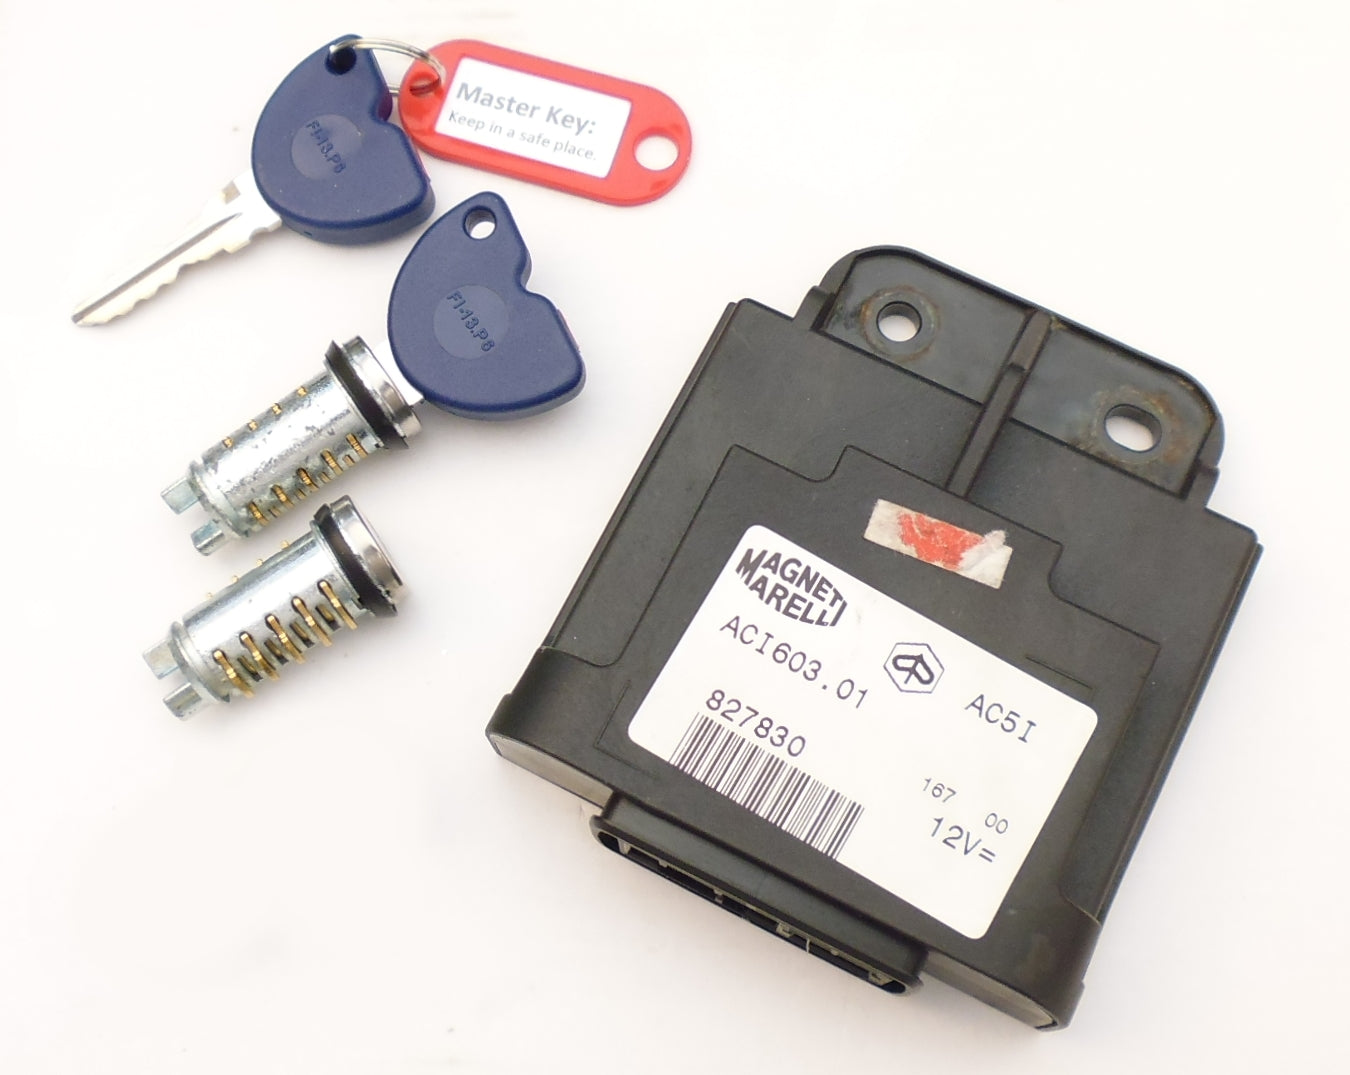 Replacement for Lost Immobilizer keys for Vespa, Piaggio, Gilera Scooters